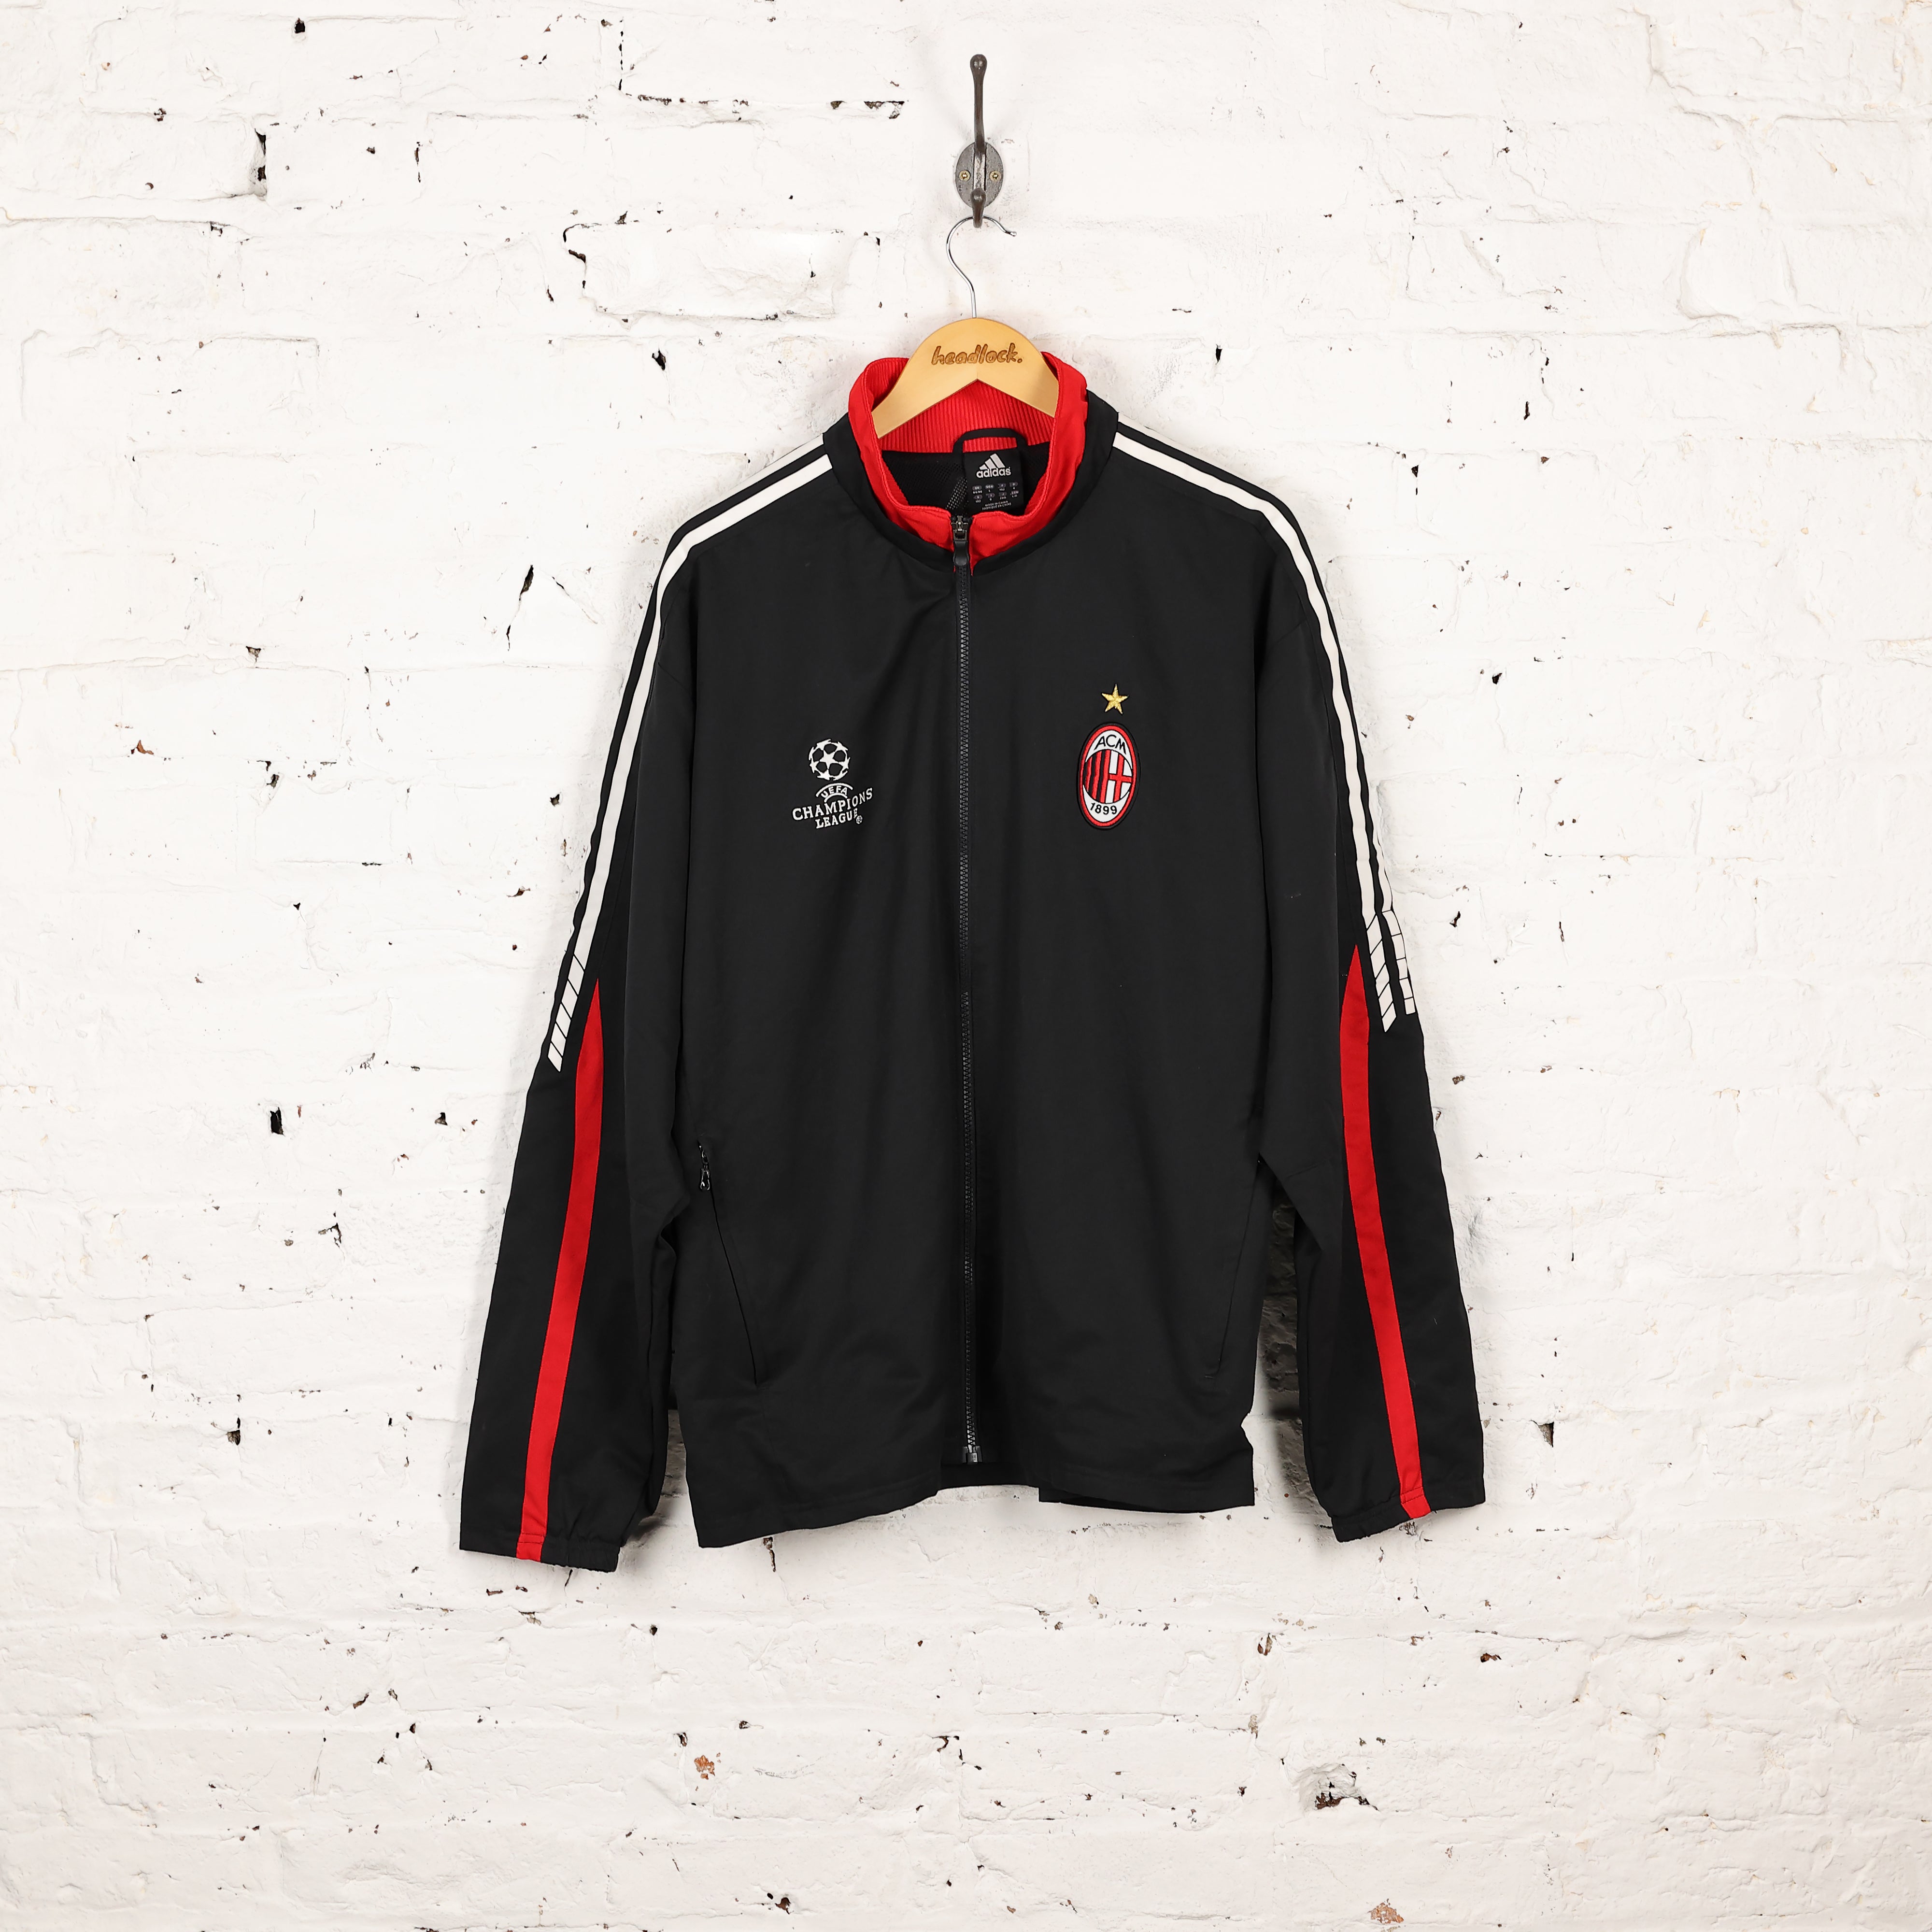 Adidas AC Milan Champions League Tracksuit Top Jacket - Black - L – Headlock